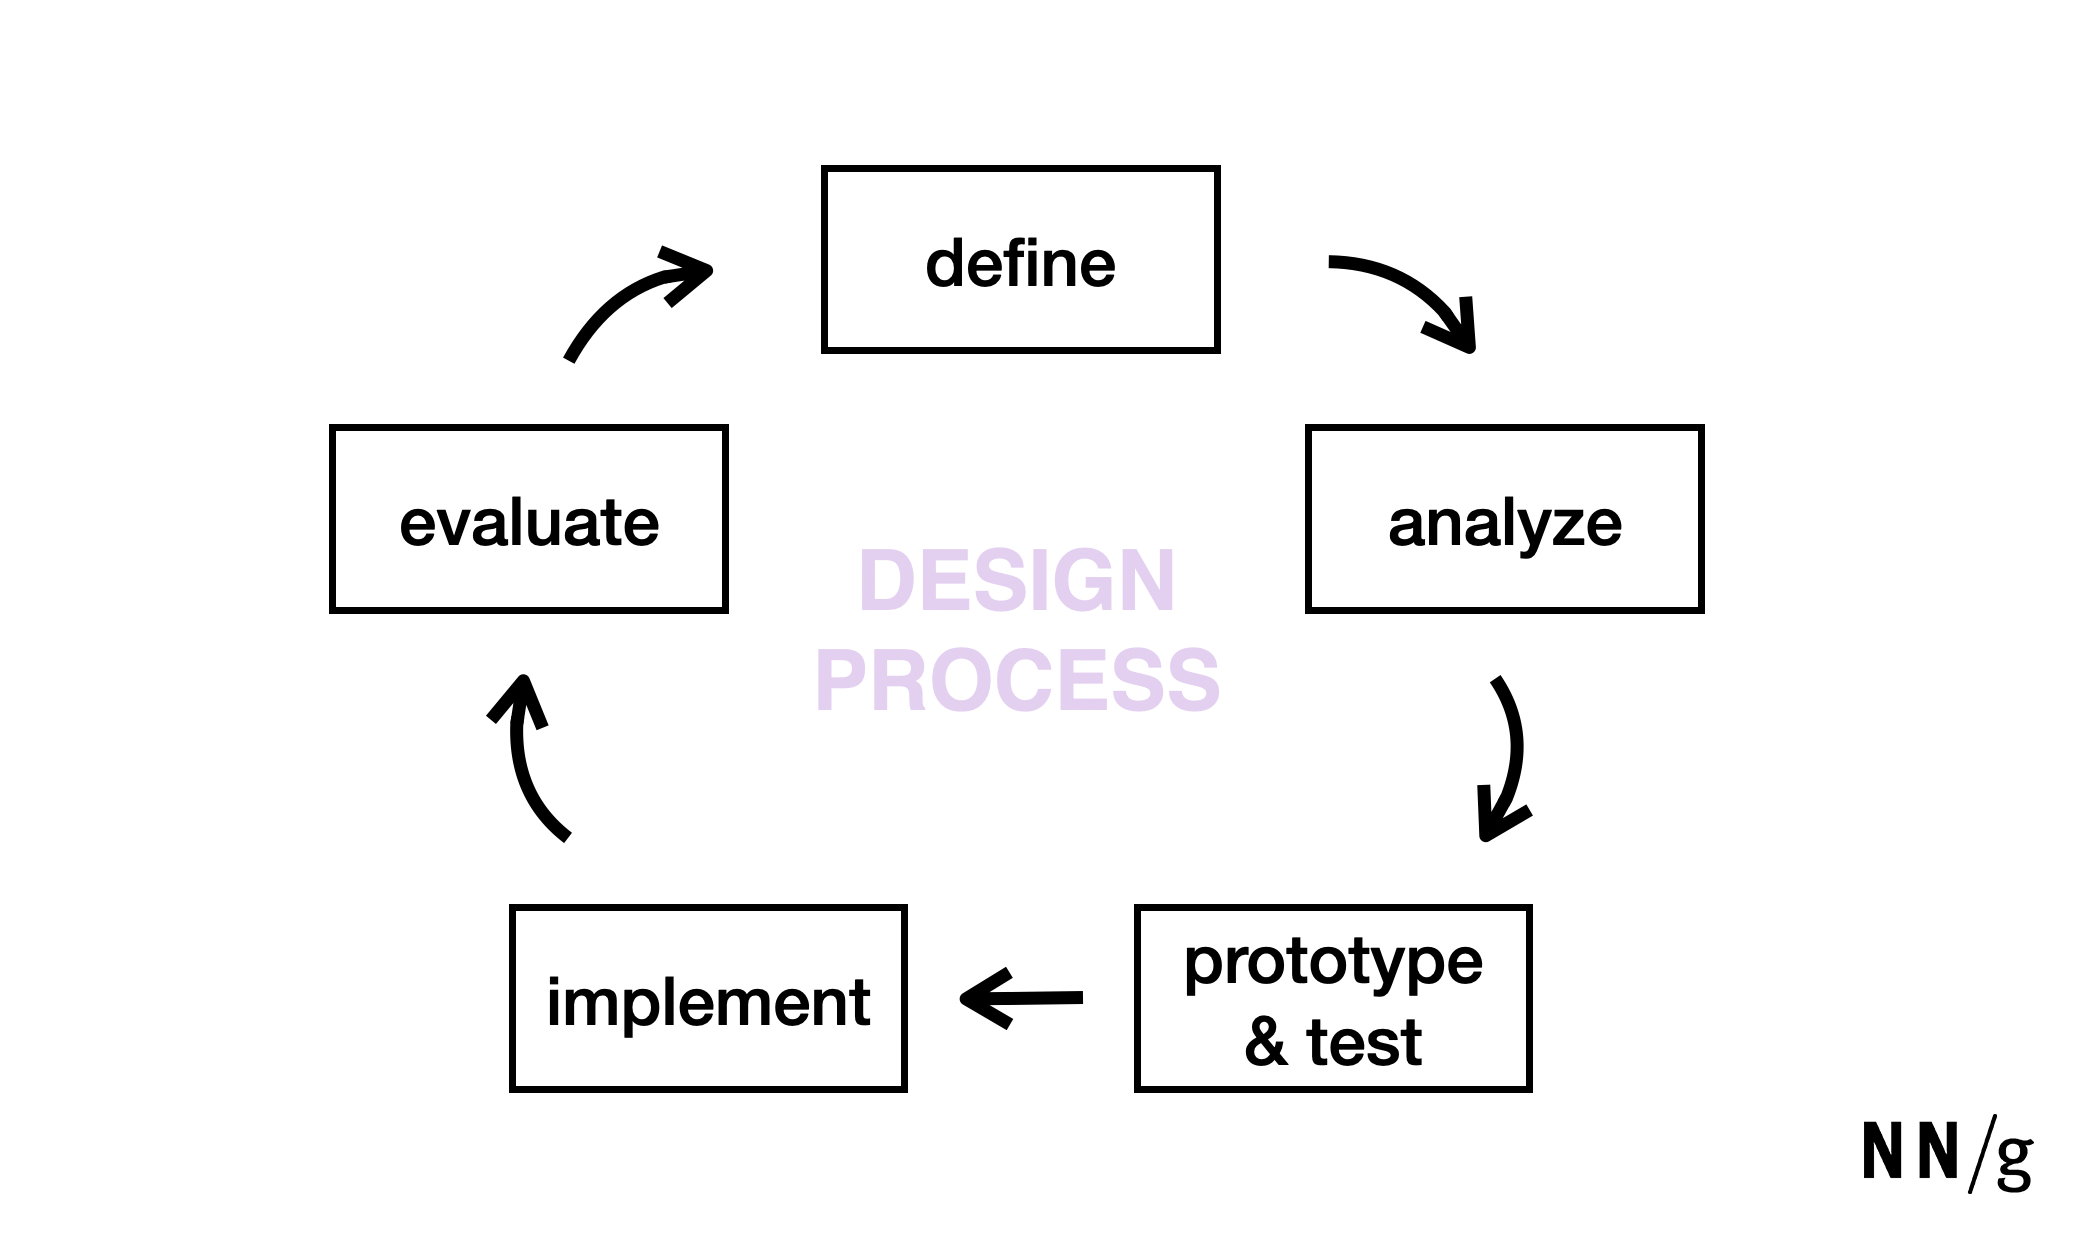 Design process: Define, Analyze, Prototype & Test, Implement, Evaluate